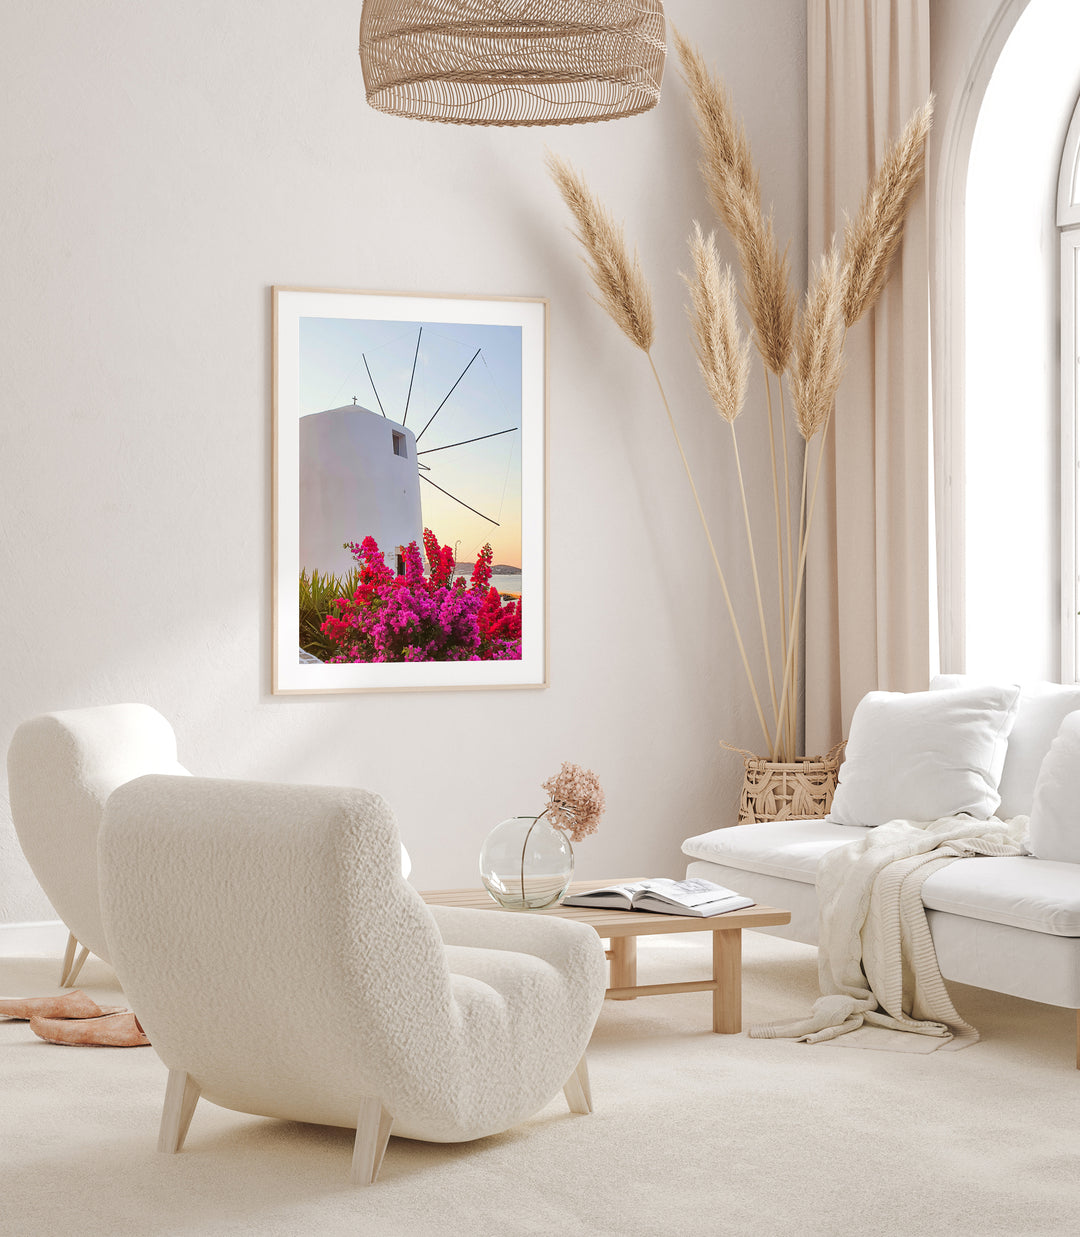 Paros Windmühle | Fine Art Poster Print